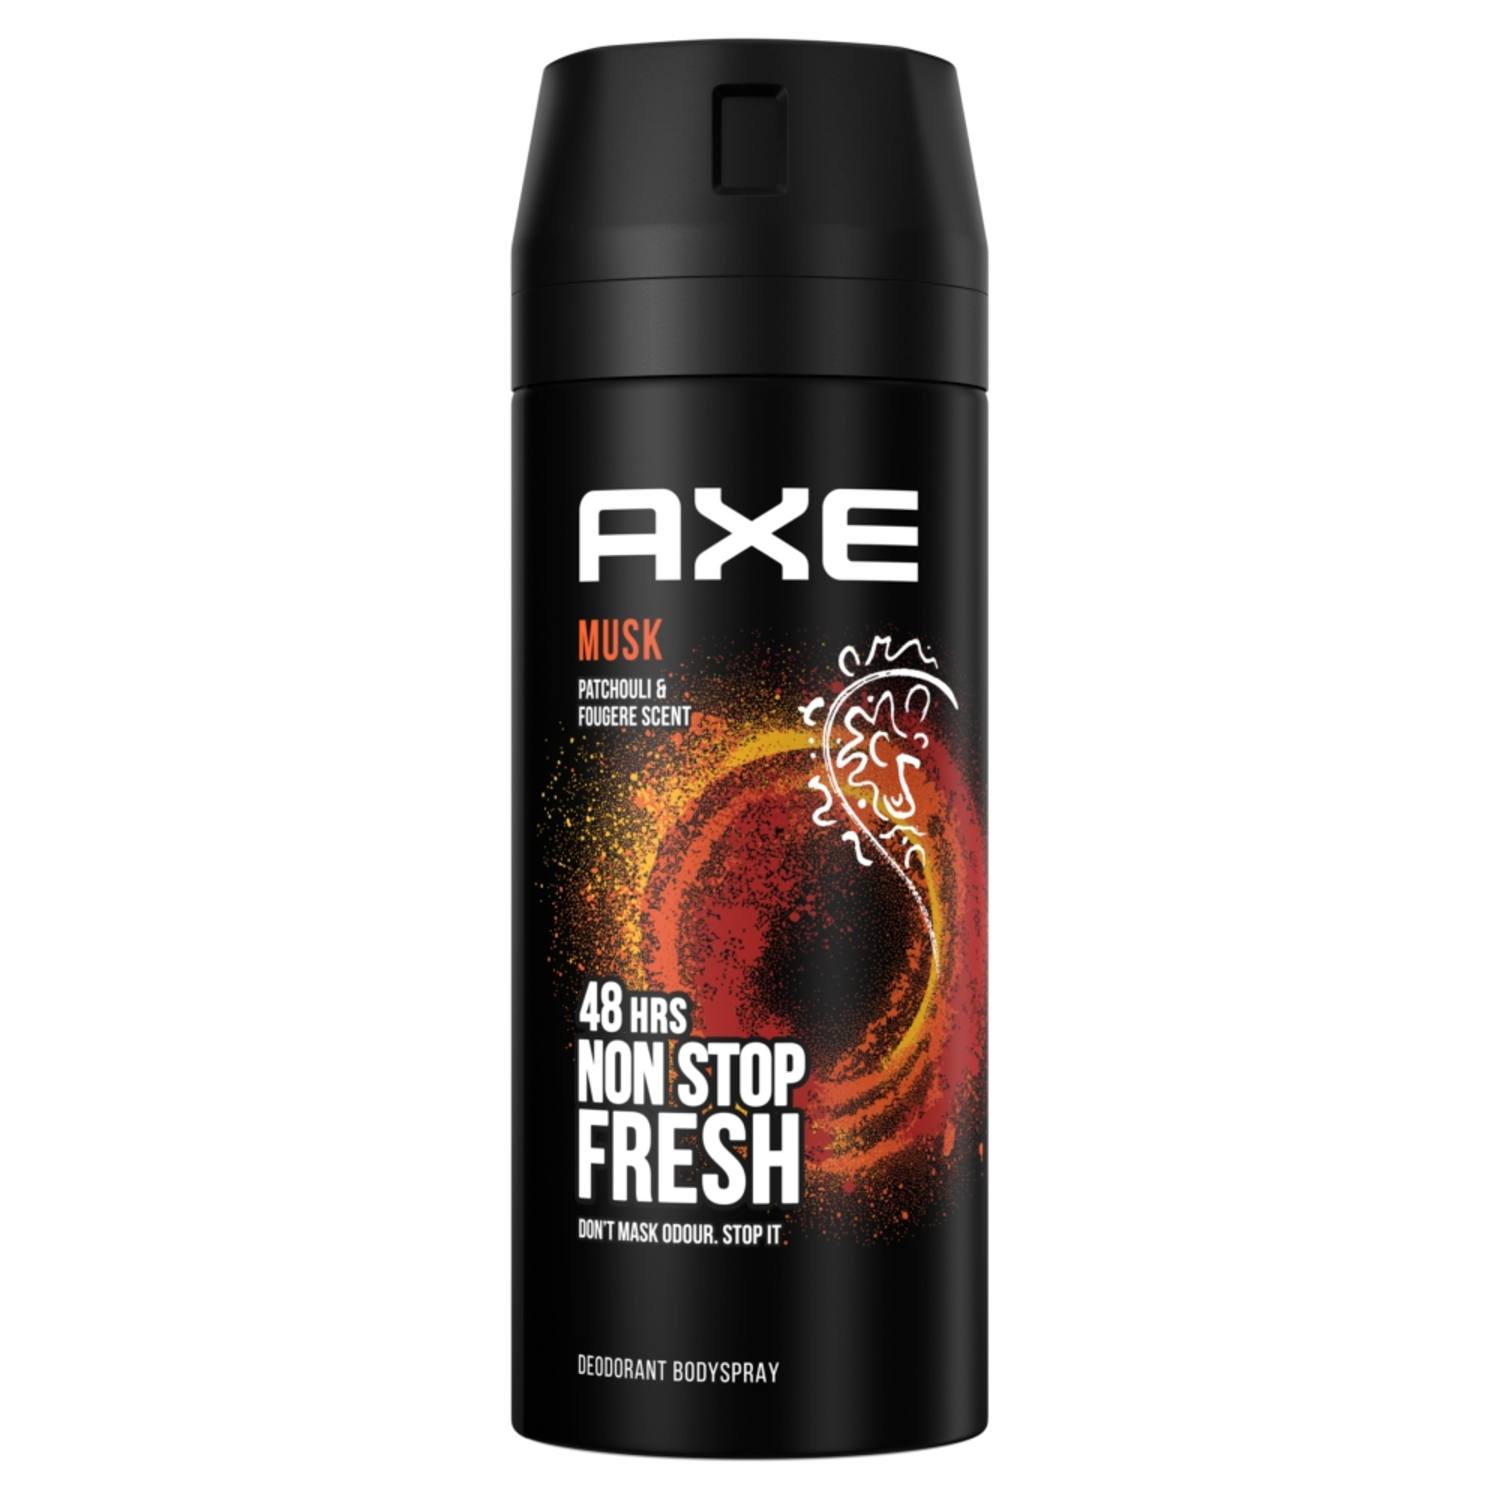 Axe Musk Deodorant Bodyspray kopen